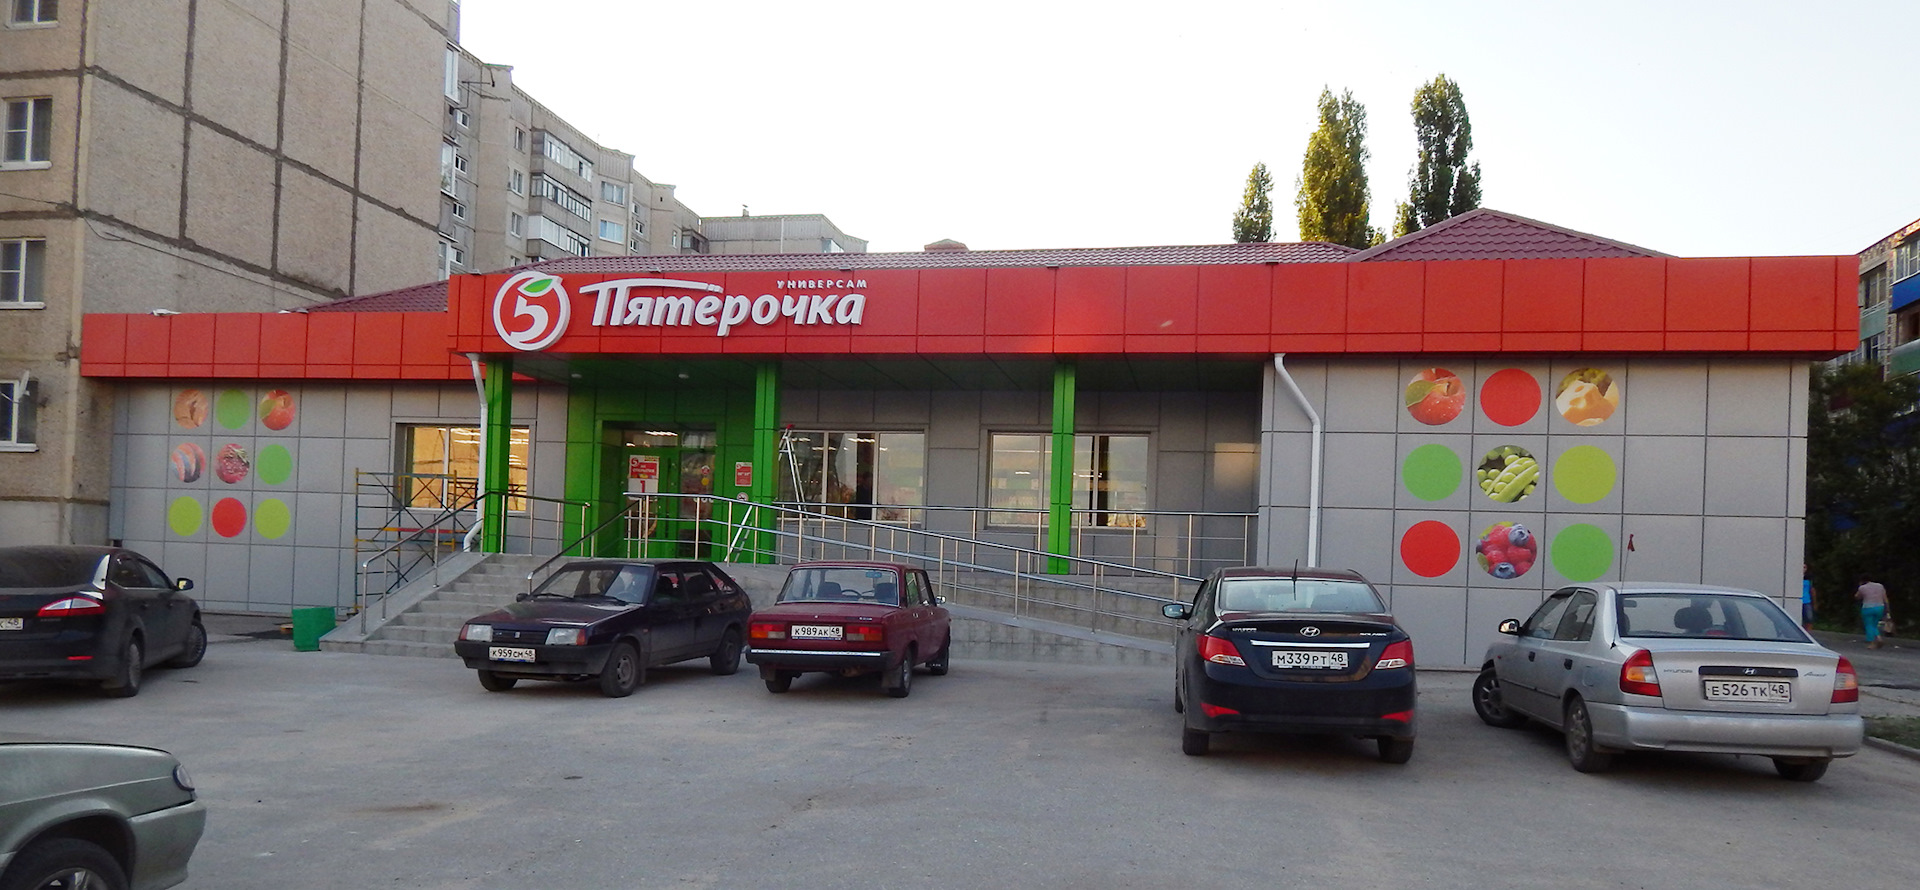 Фасад магазина Пятерочка